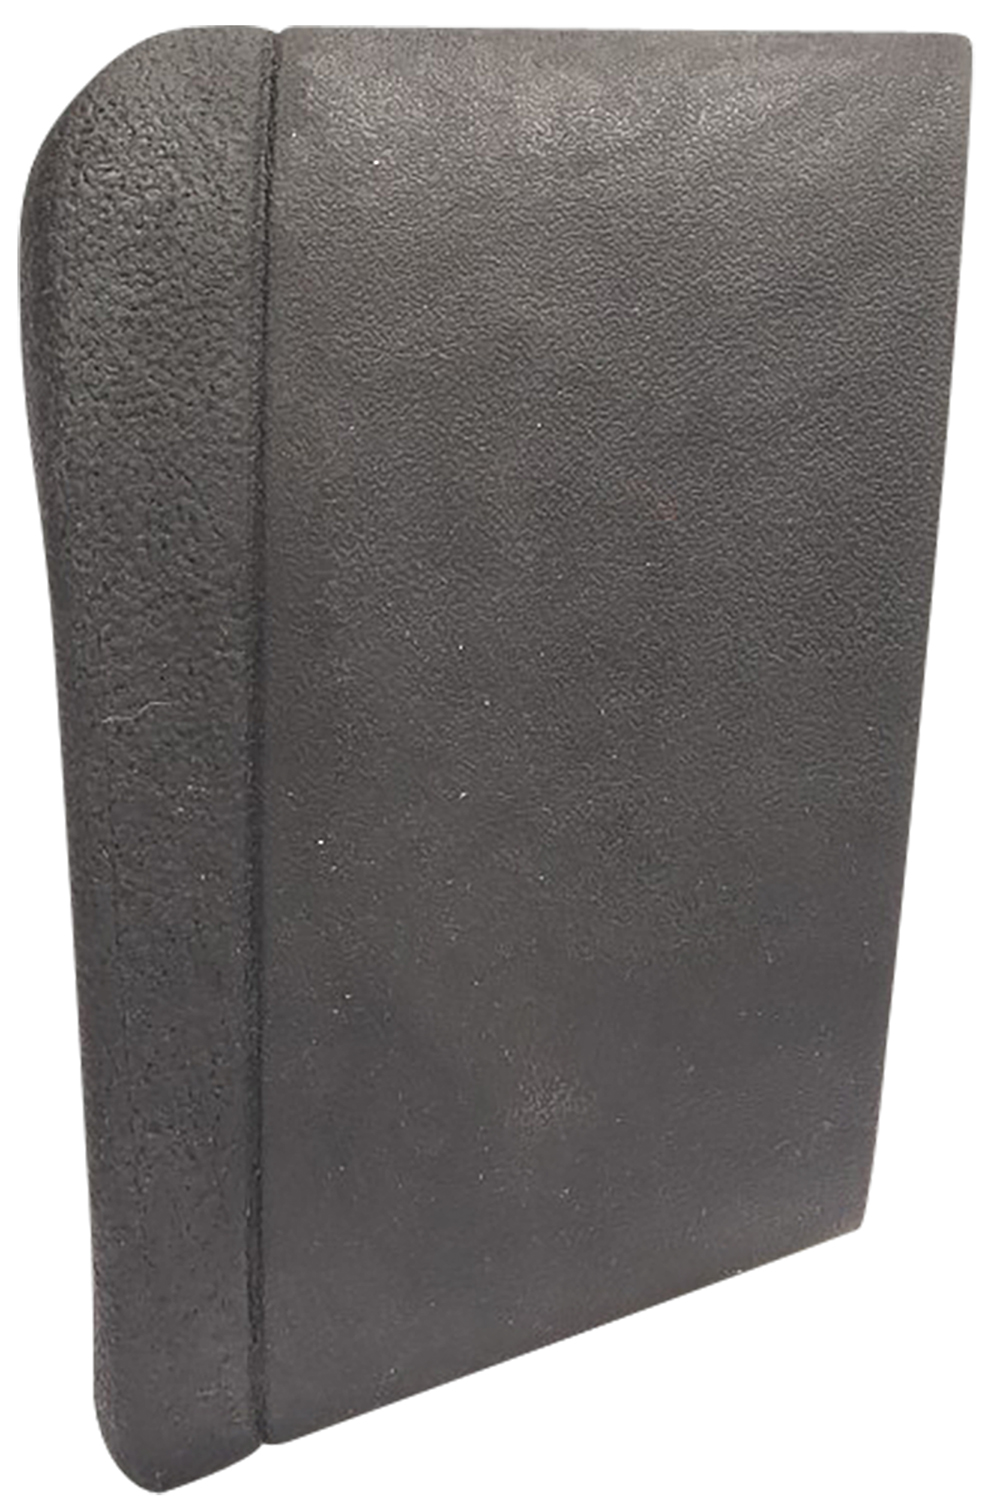 Pachmayr 04421 Renegade Slip On Recoil Pad Medium Black Rubber